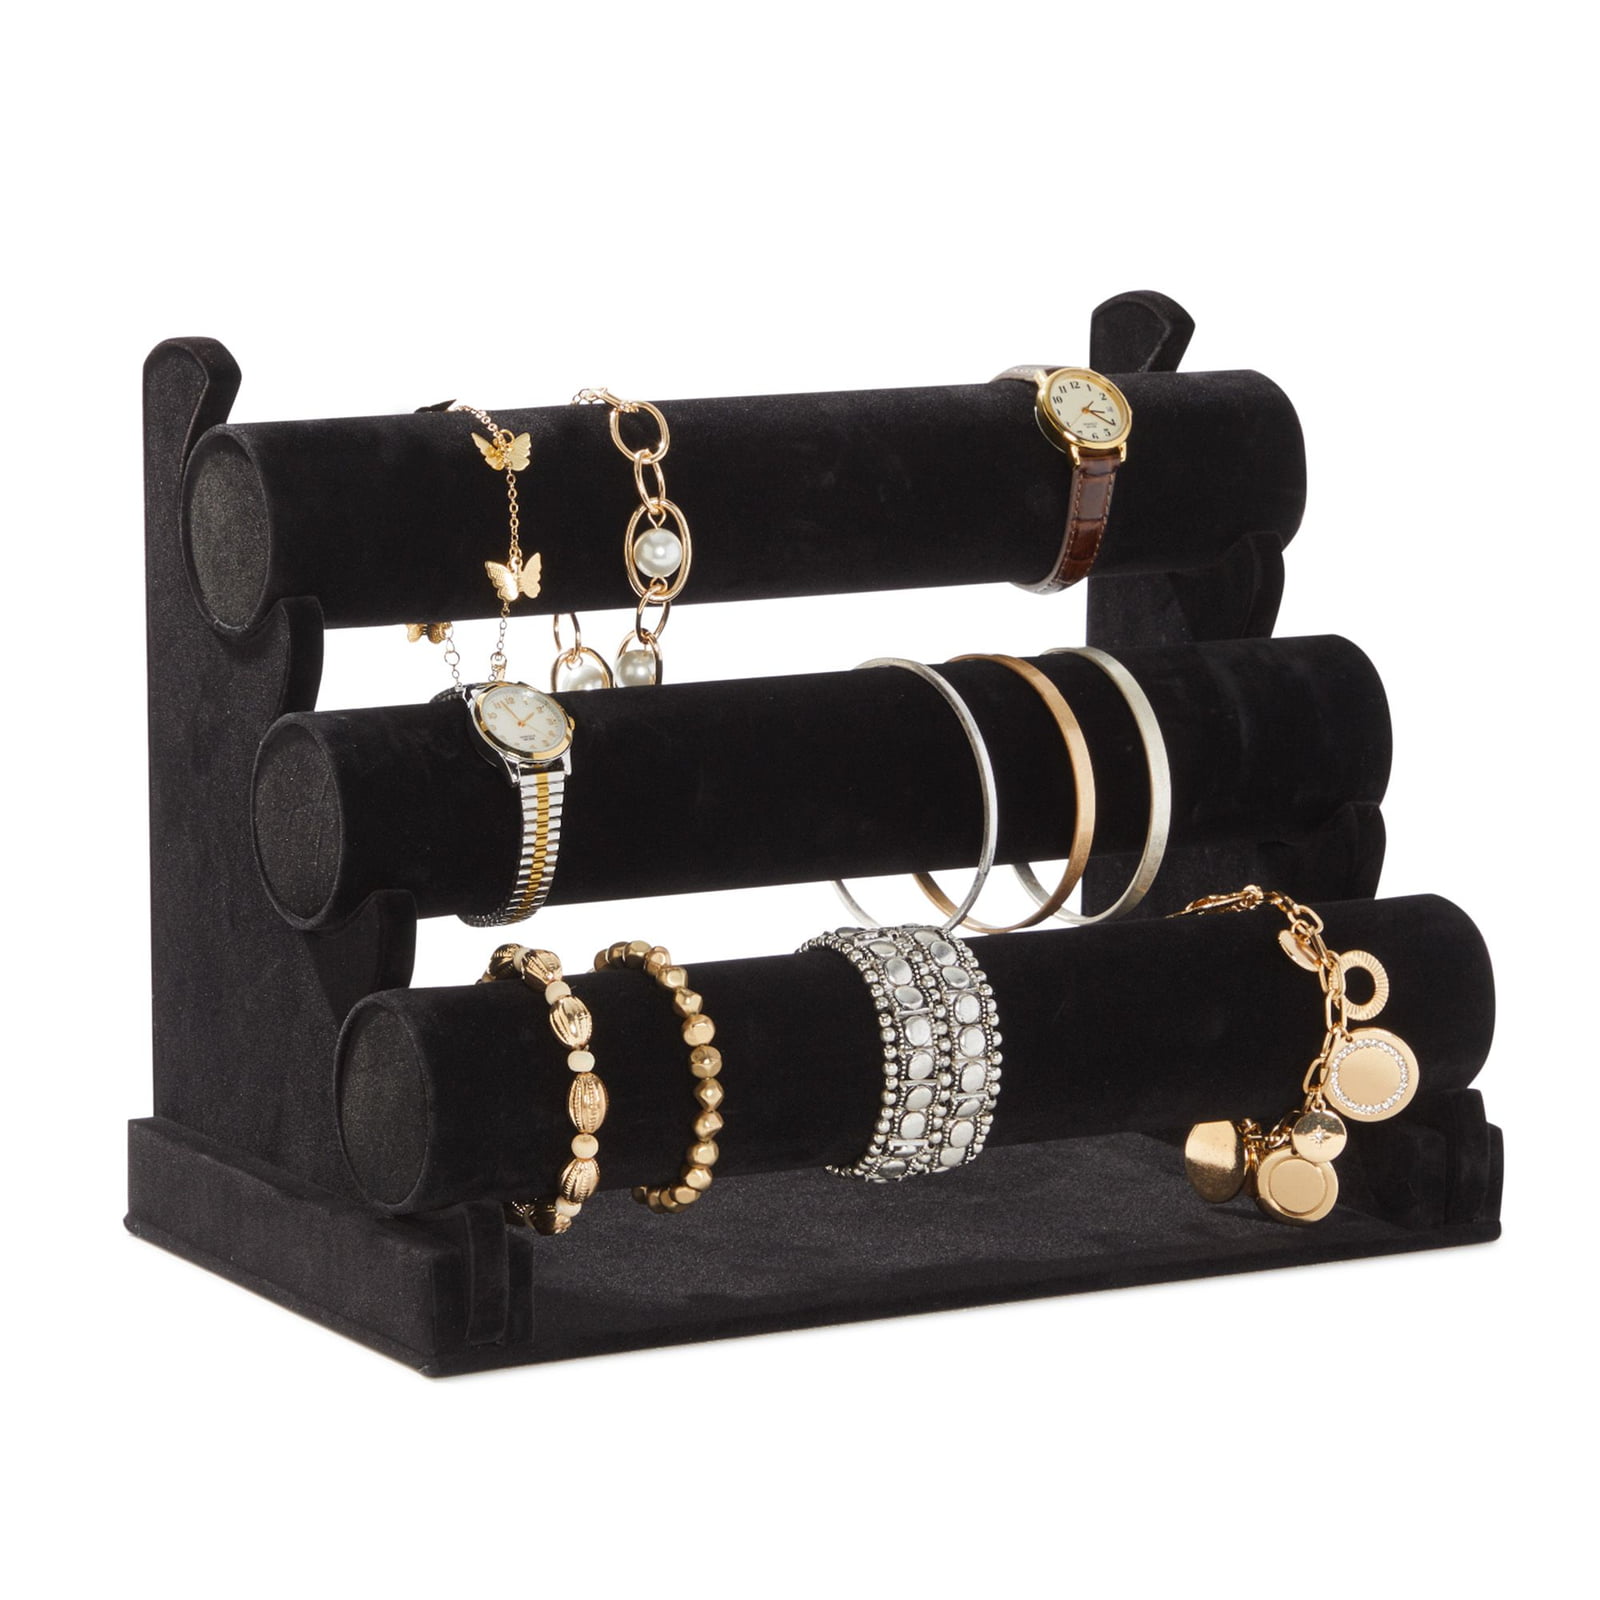 Display Jewellery Black Velvet Ring Stand Holder Jewelry Display Stand Holder 